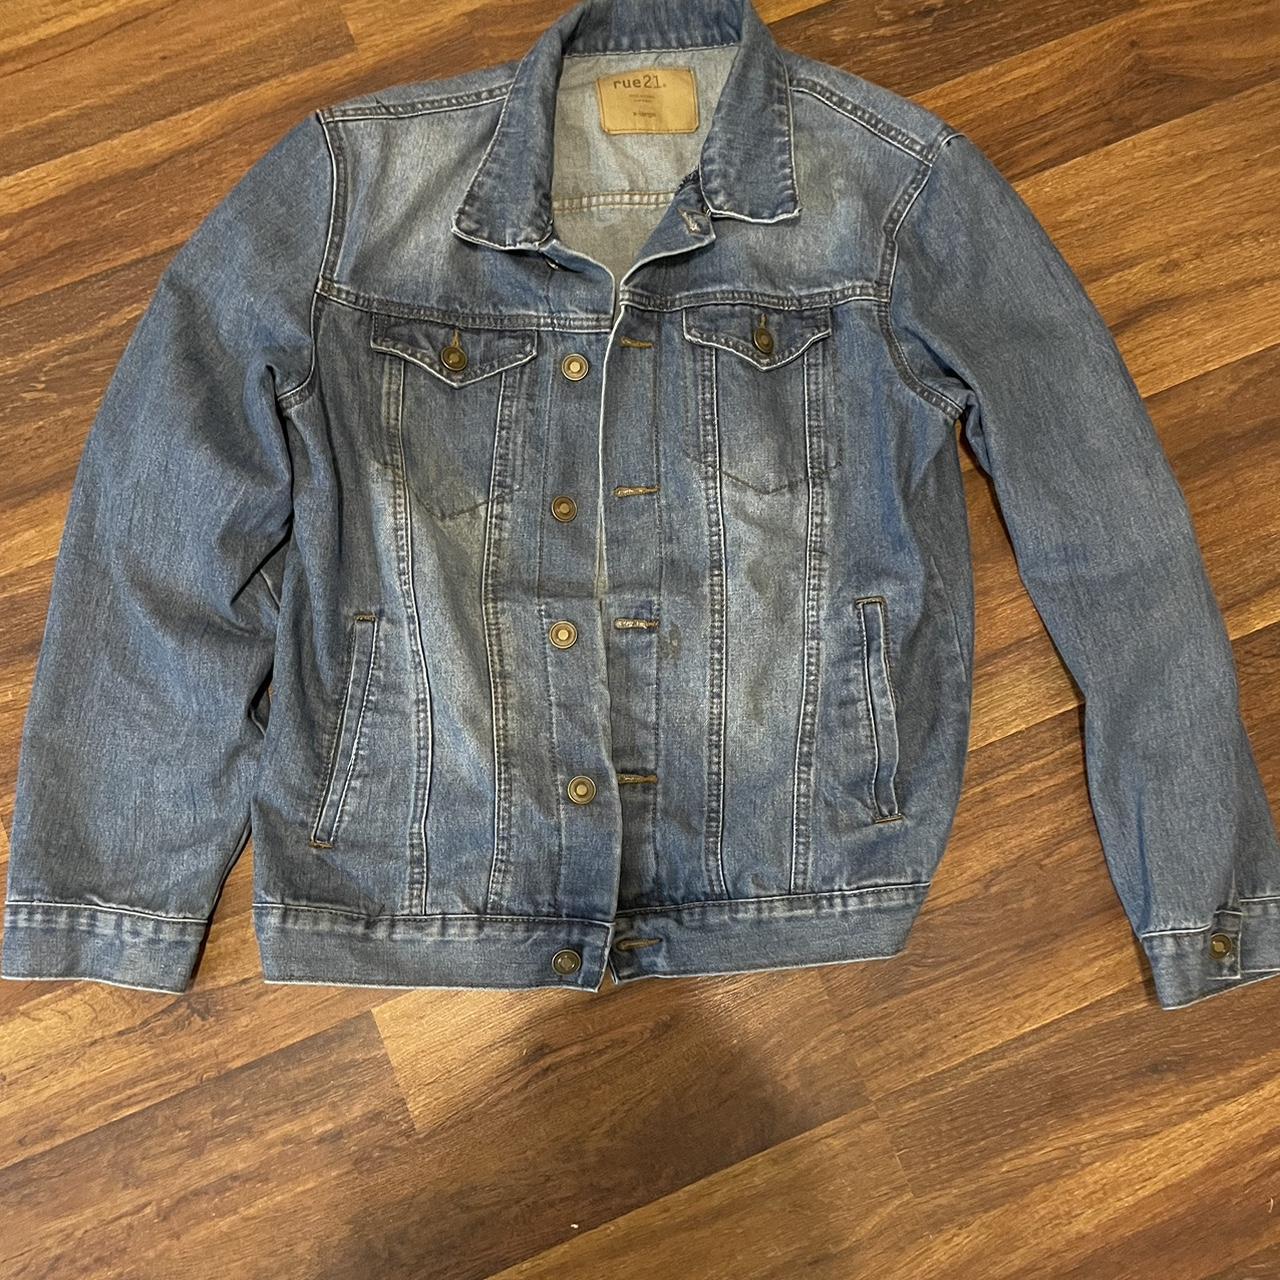 Leather denim jacket model RUE